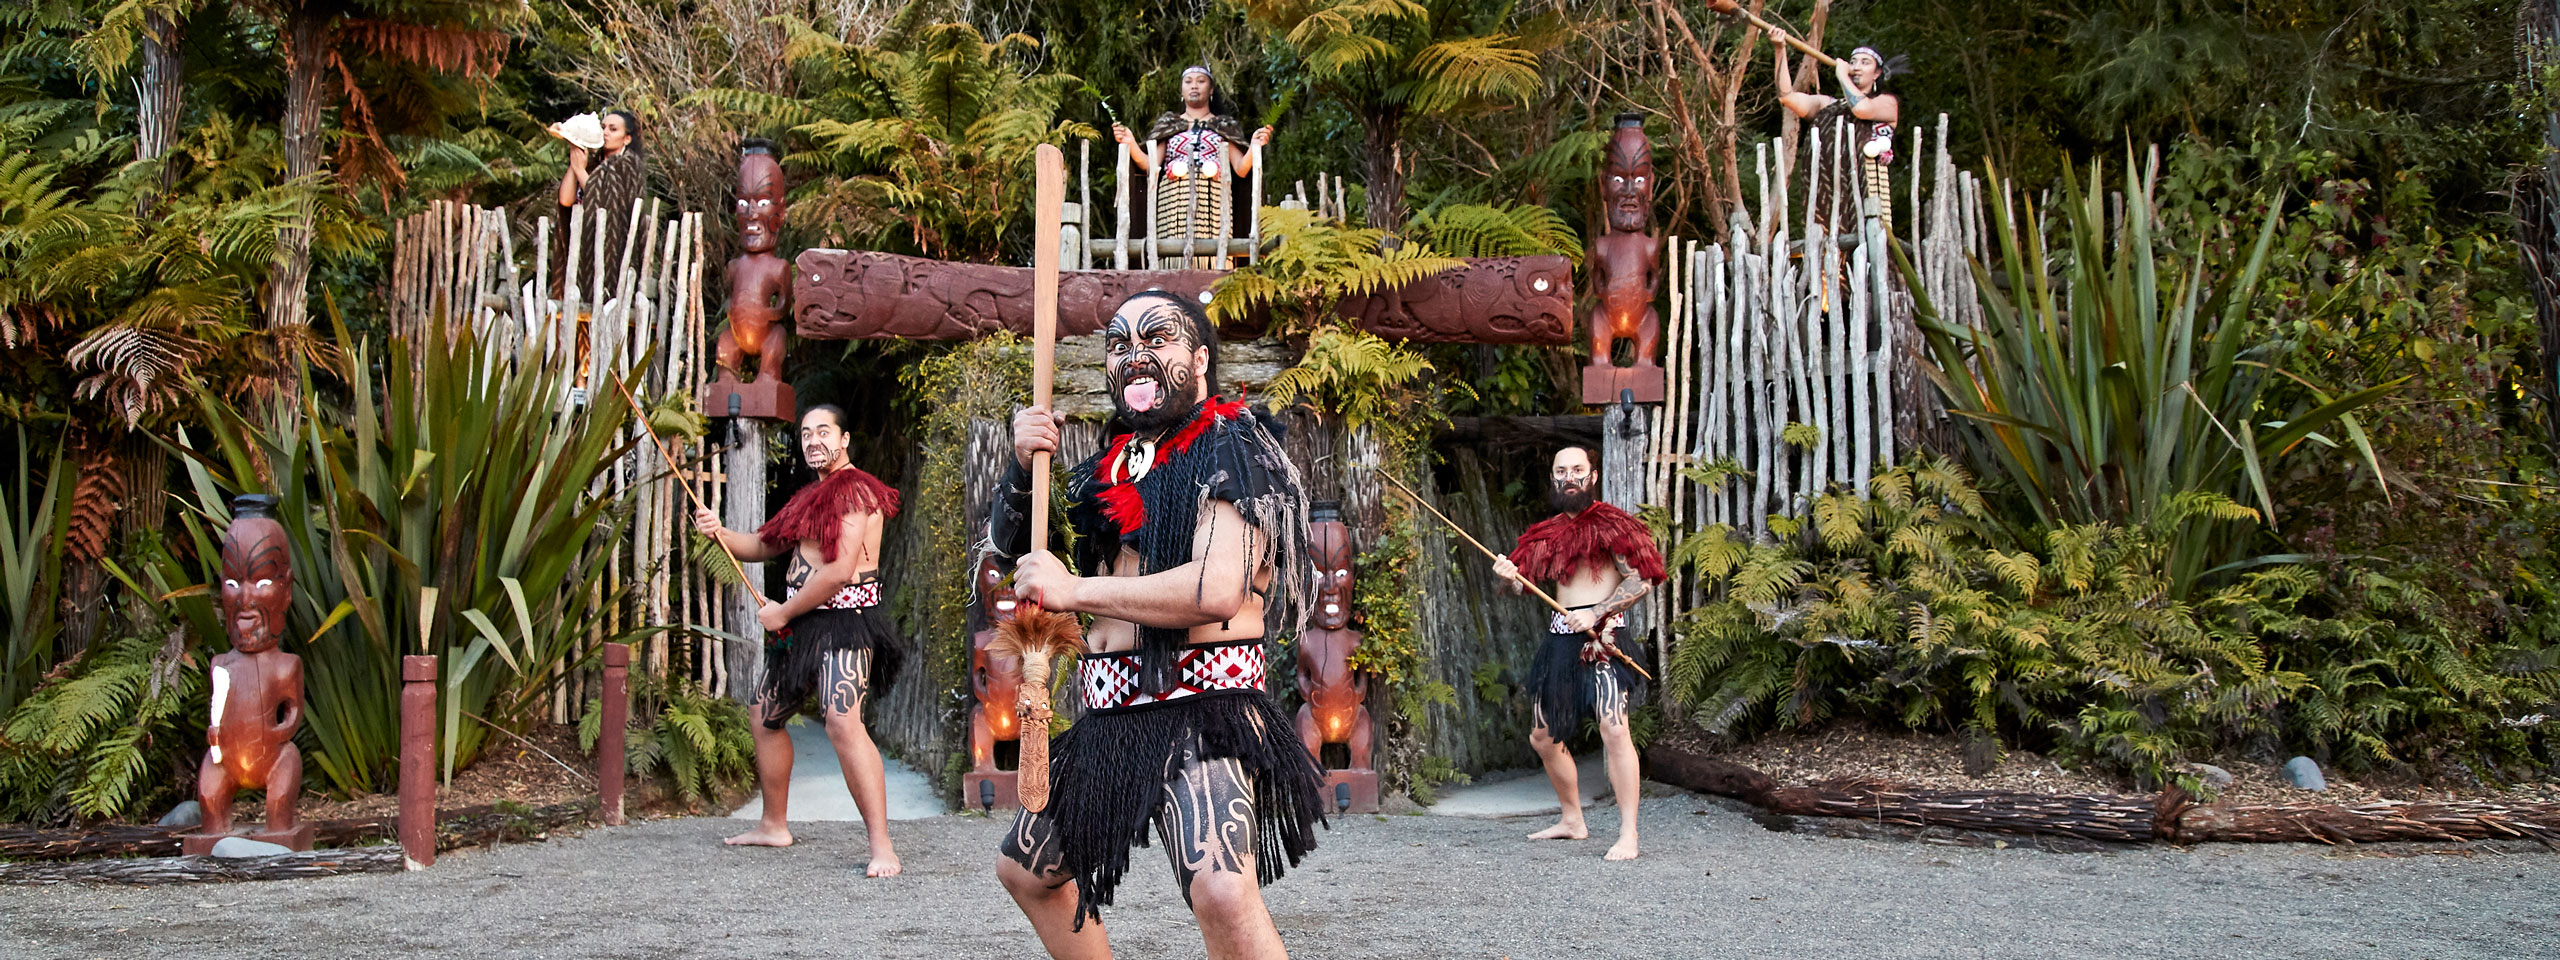 Tamaki Maori Village, Rotorua